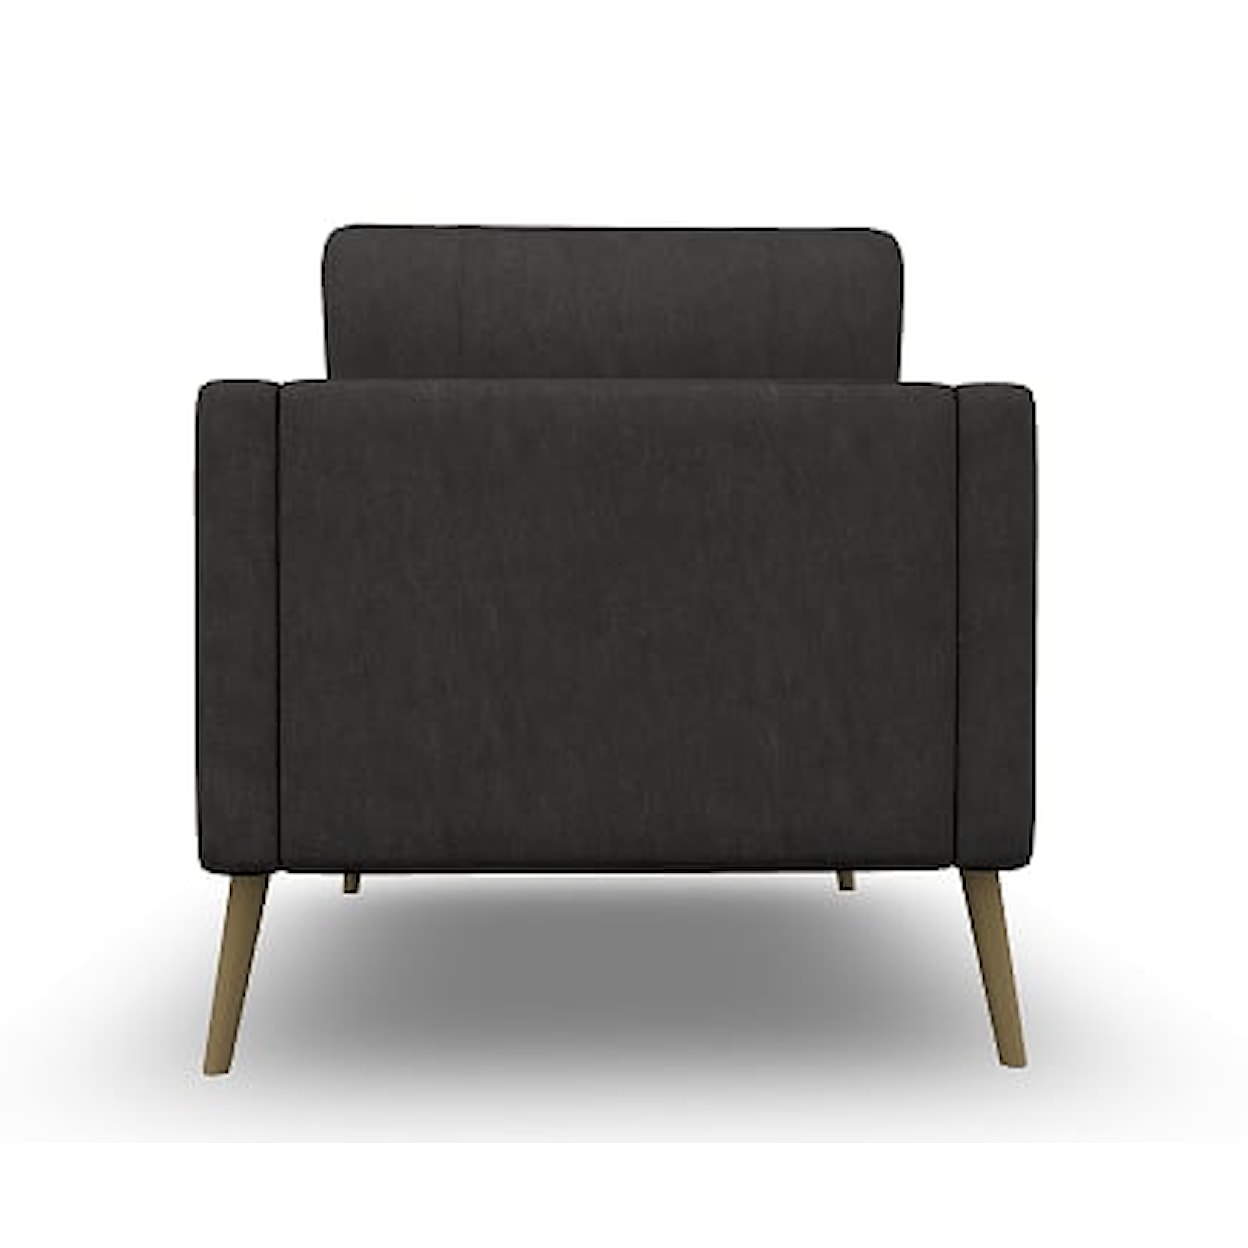 Bravo Furniture Trafton Stationary Chair